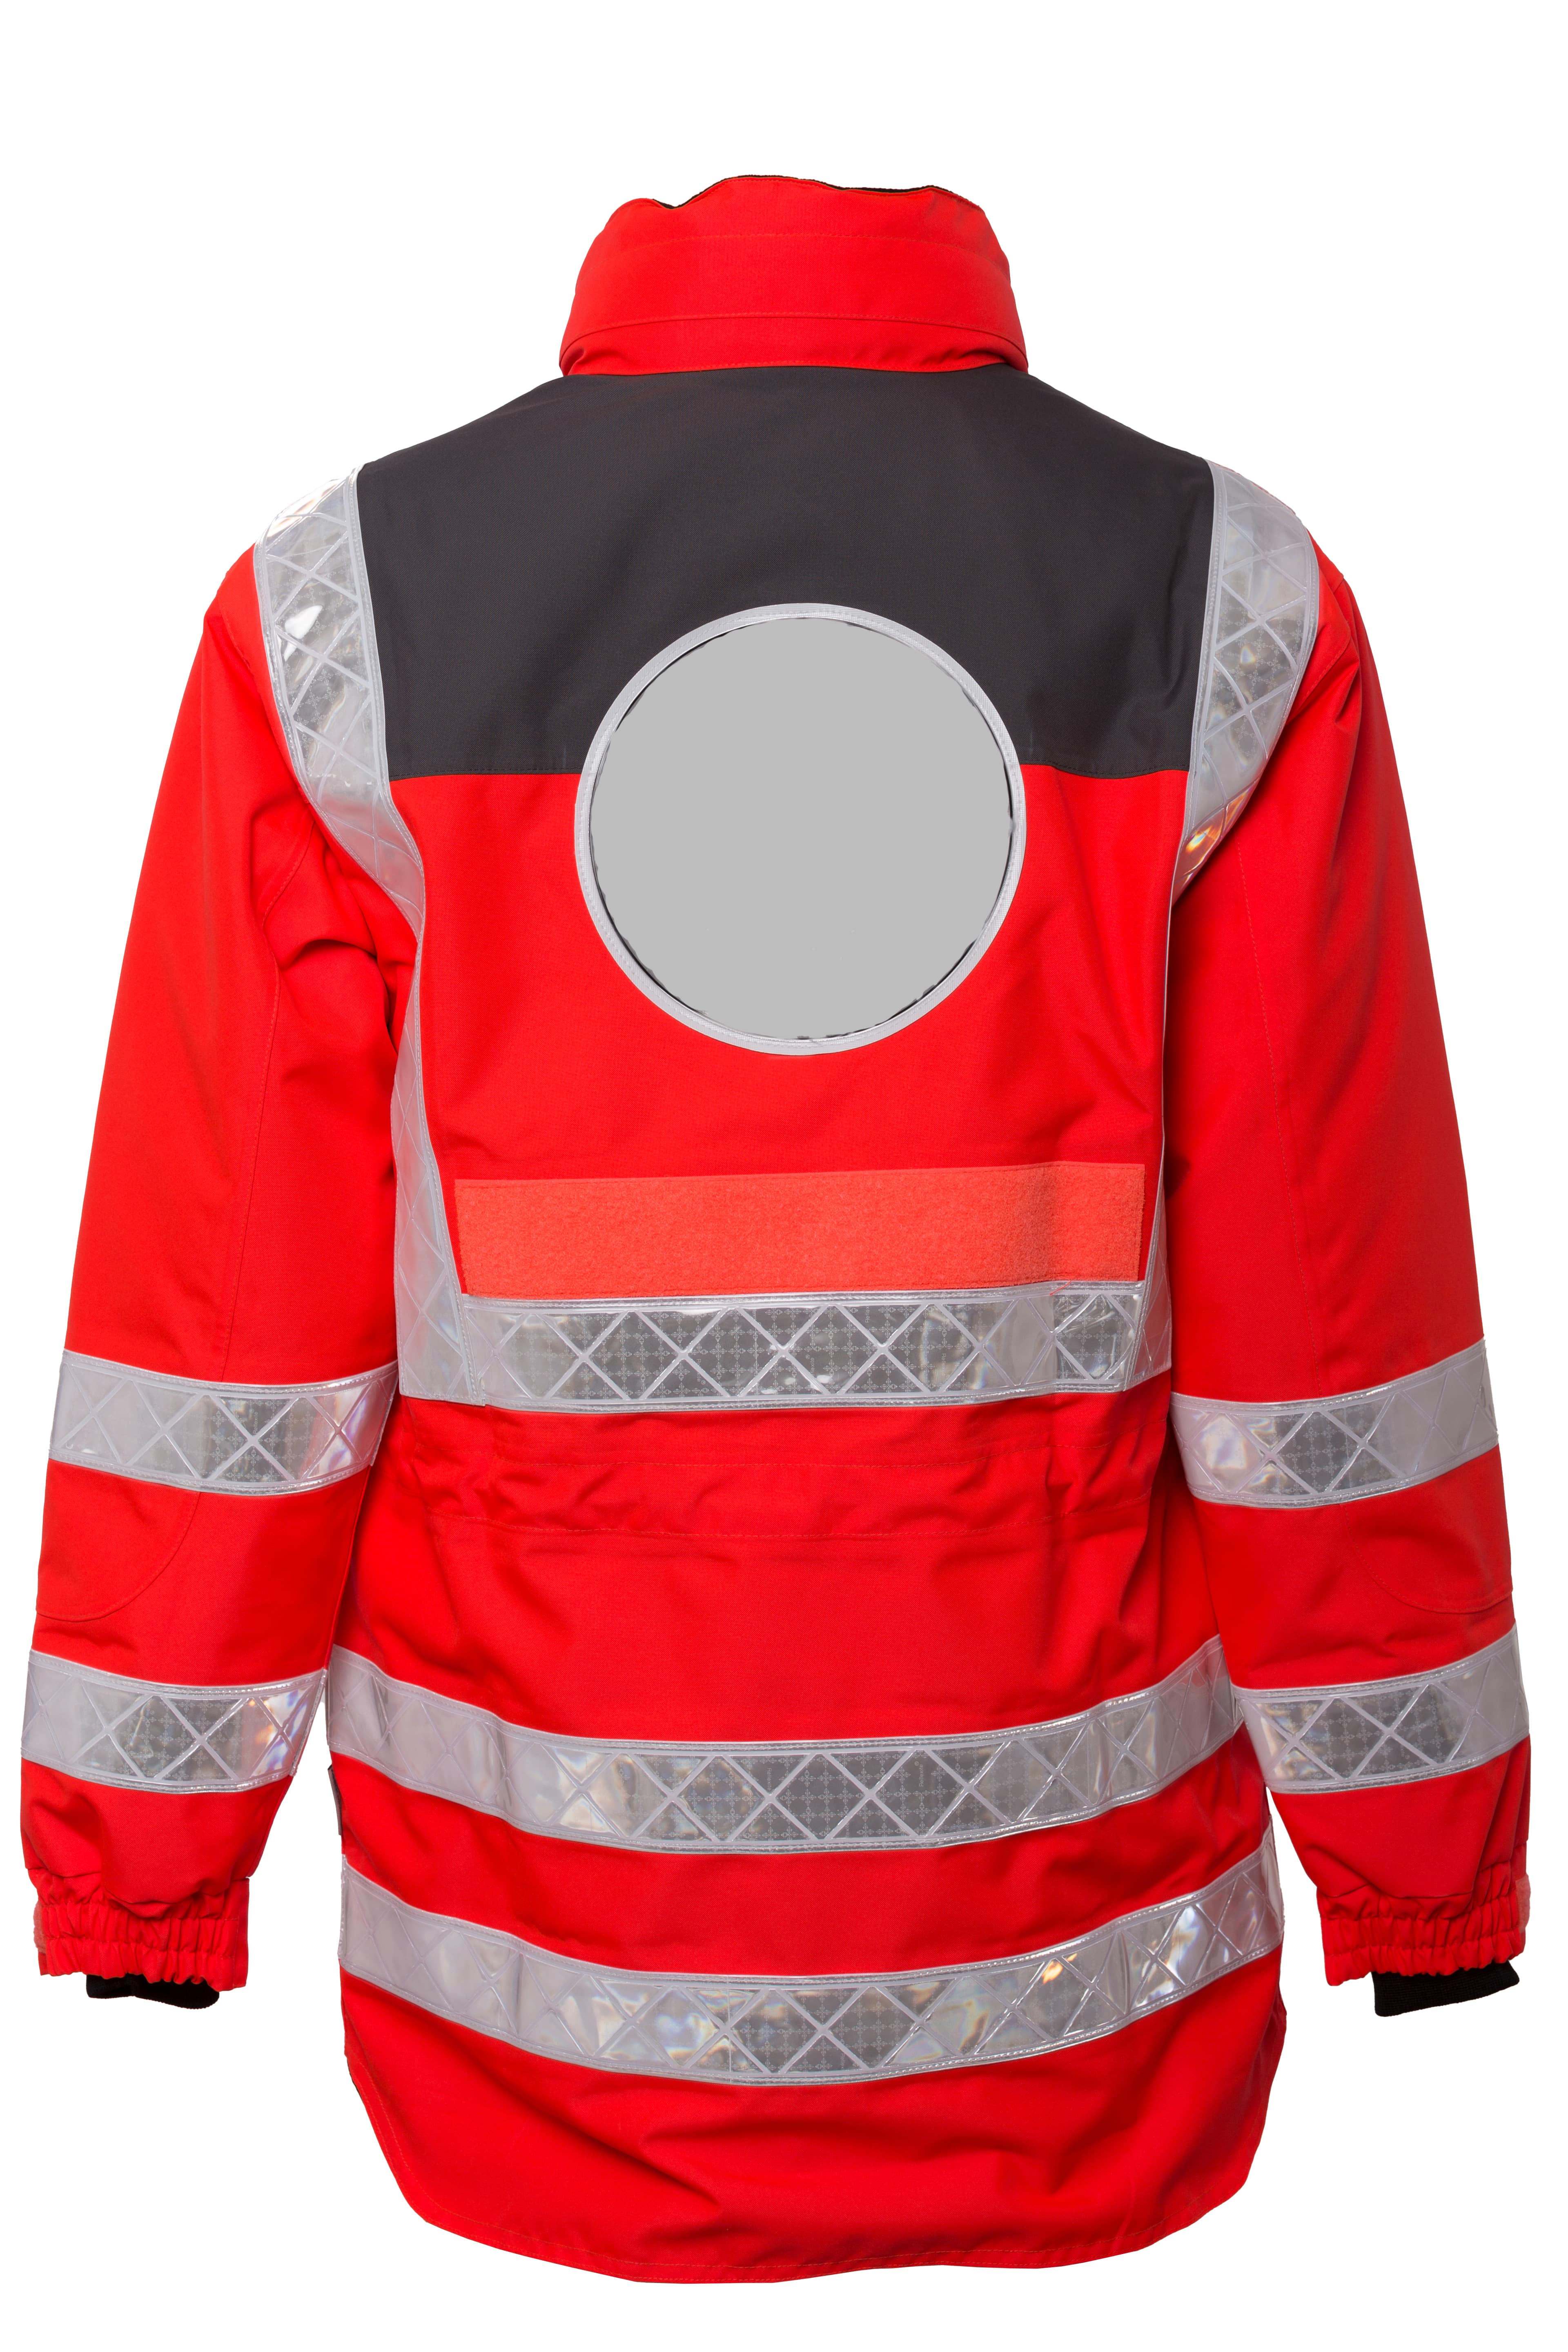 Rescuewear Midi-Parker  DRK Hessen HiVis Klasse 3 Neon Rot / Grau  - M